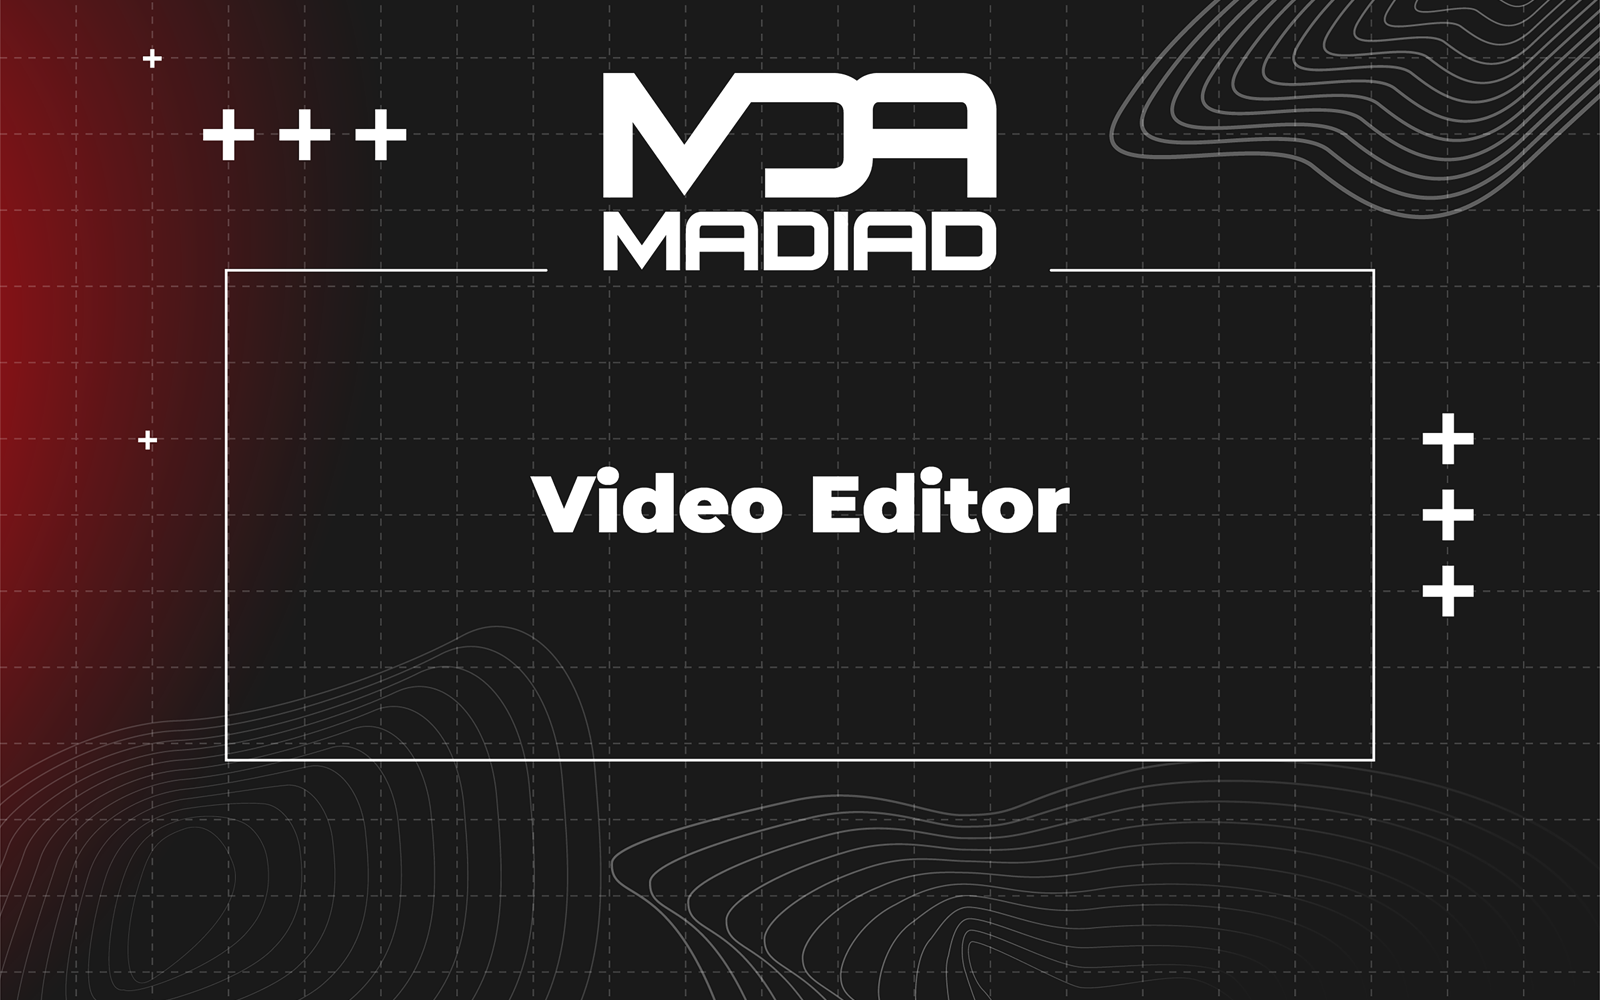 Tuyển dụng Video Editor